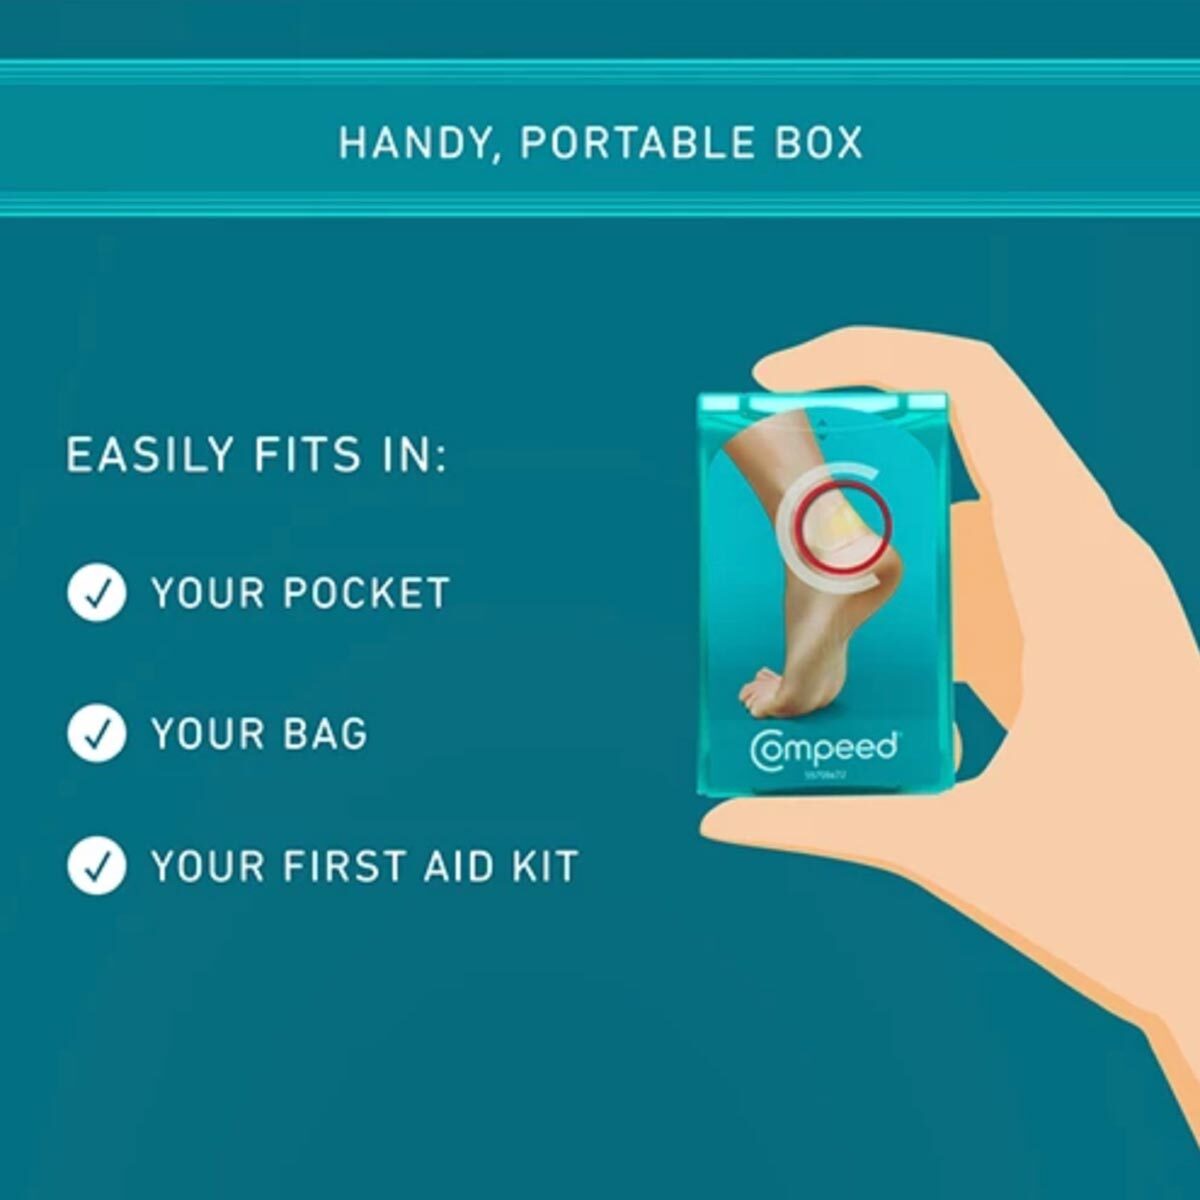 Handy, Portable Box